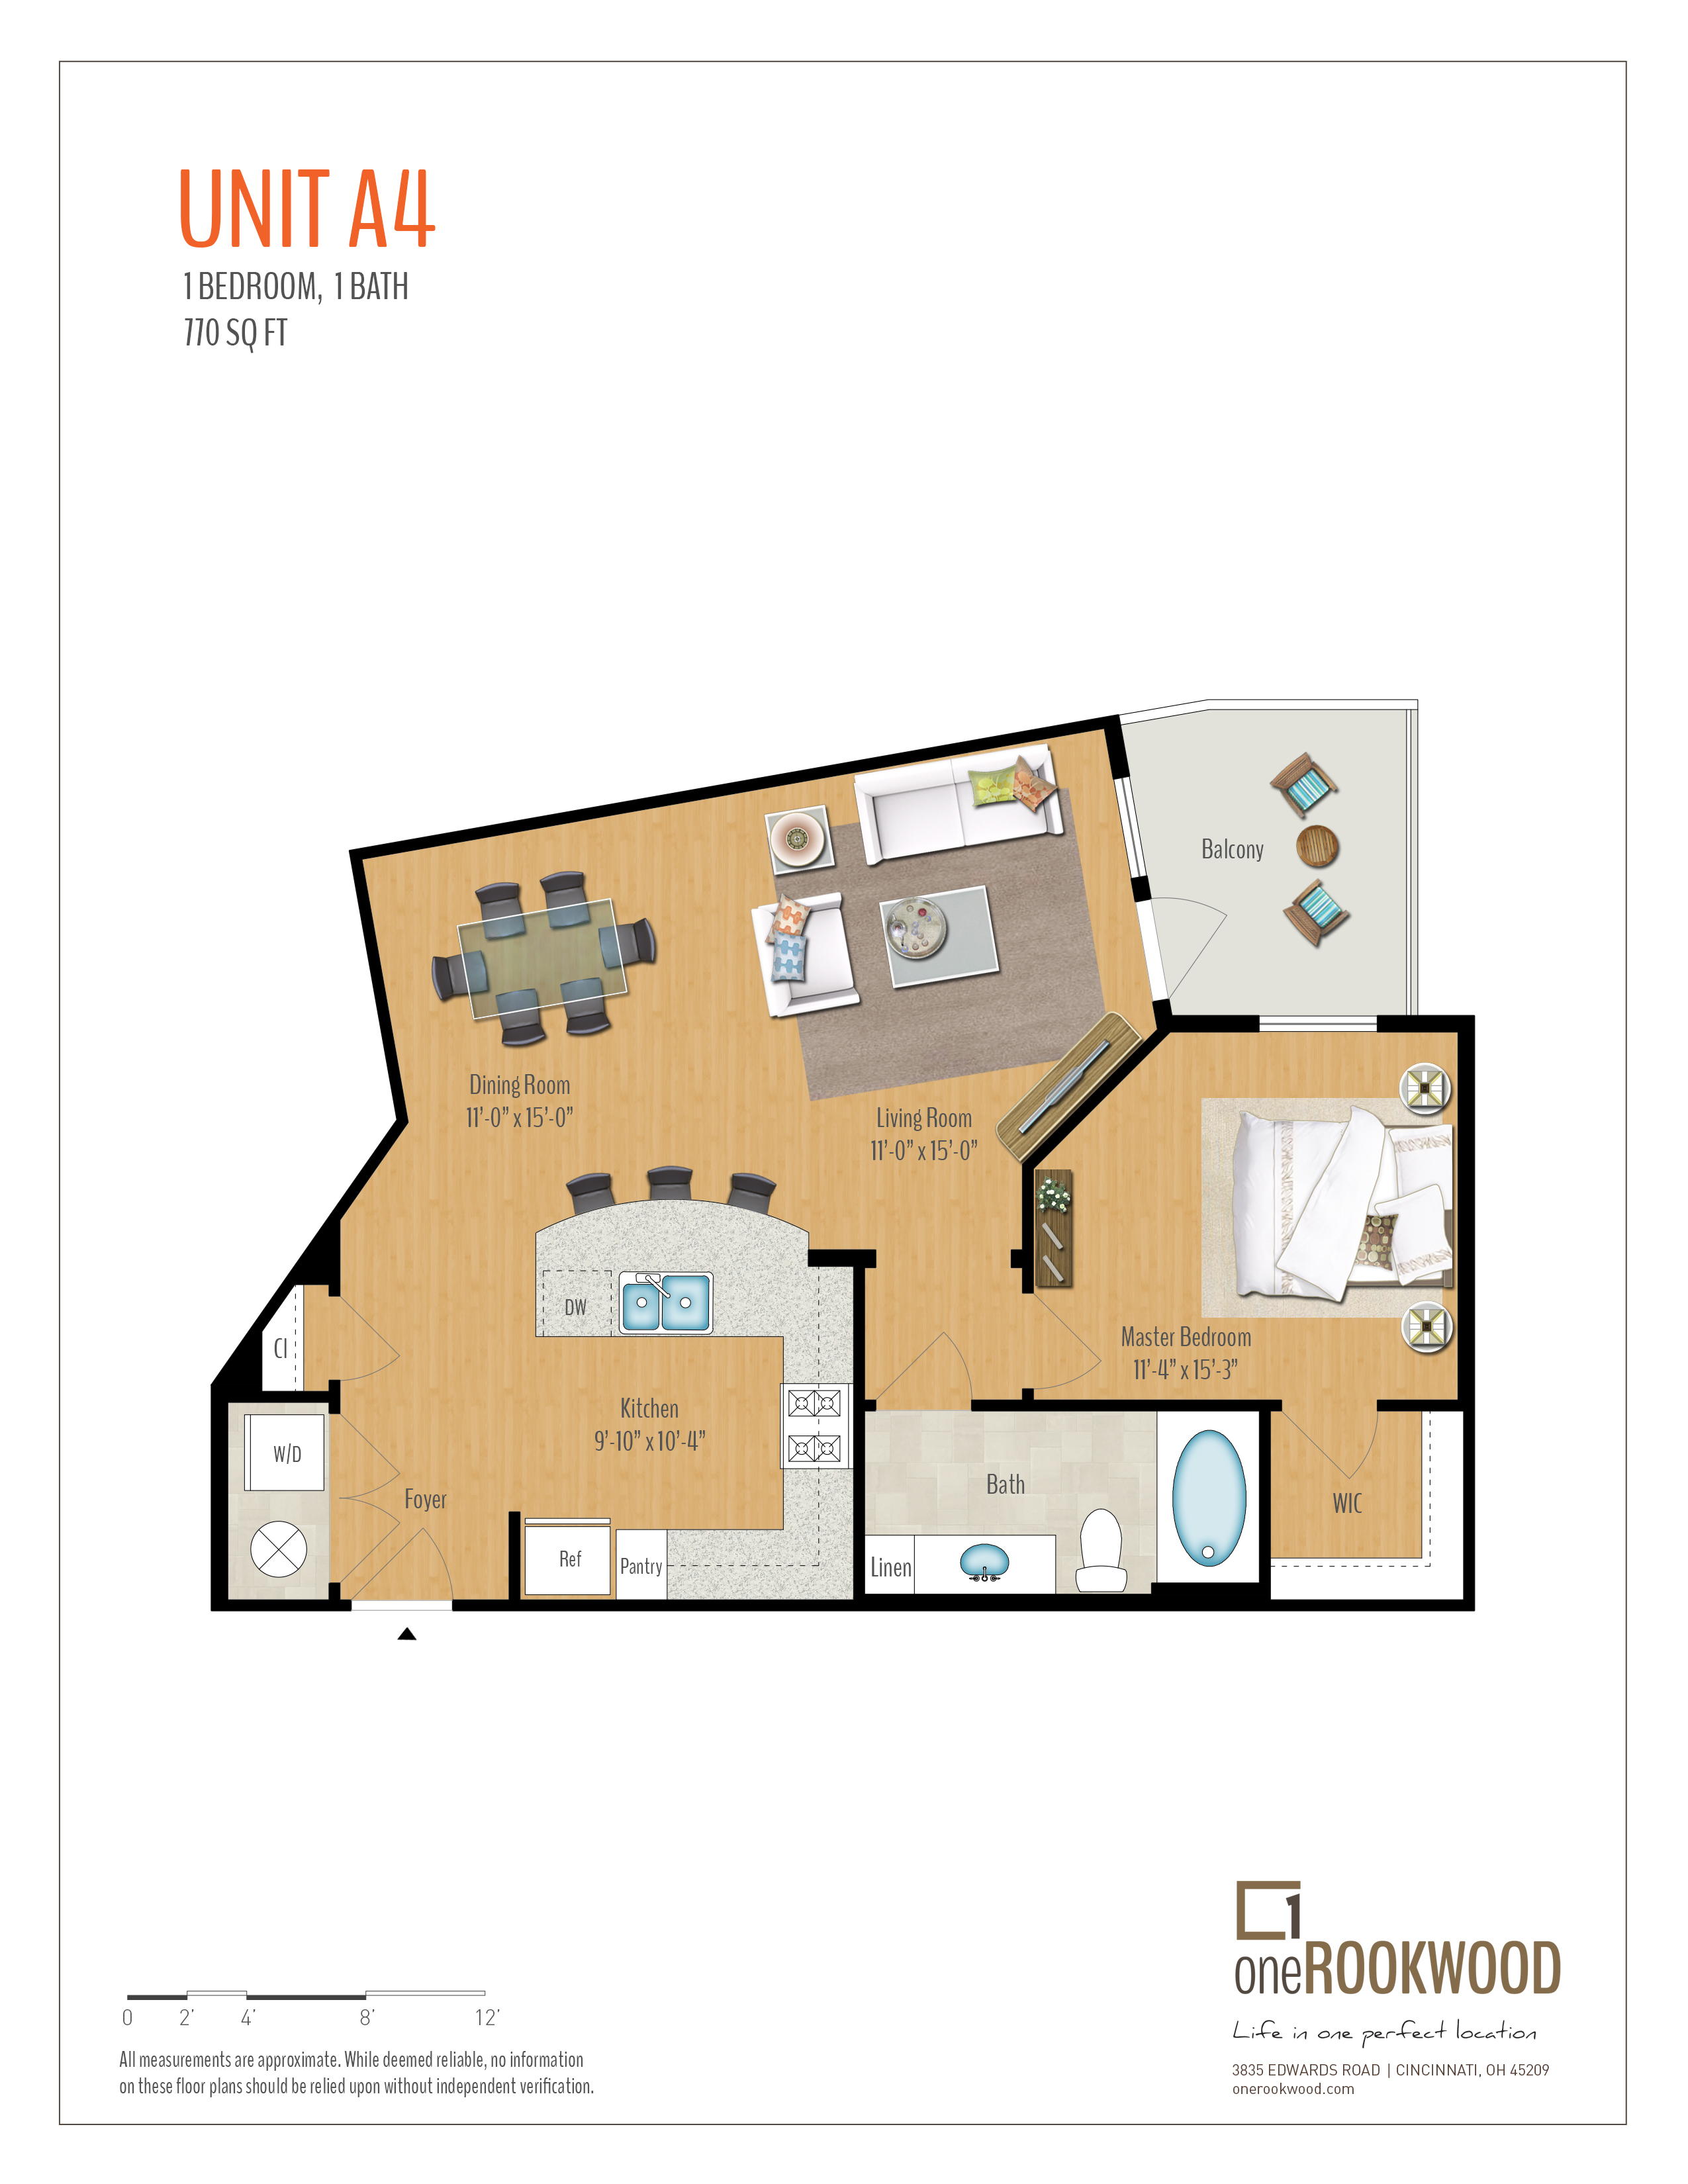 OneRookwood-Unit A4-FloorPlan-Print.jpg